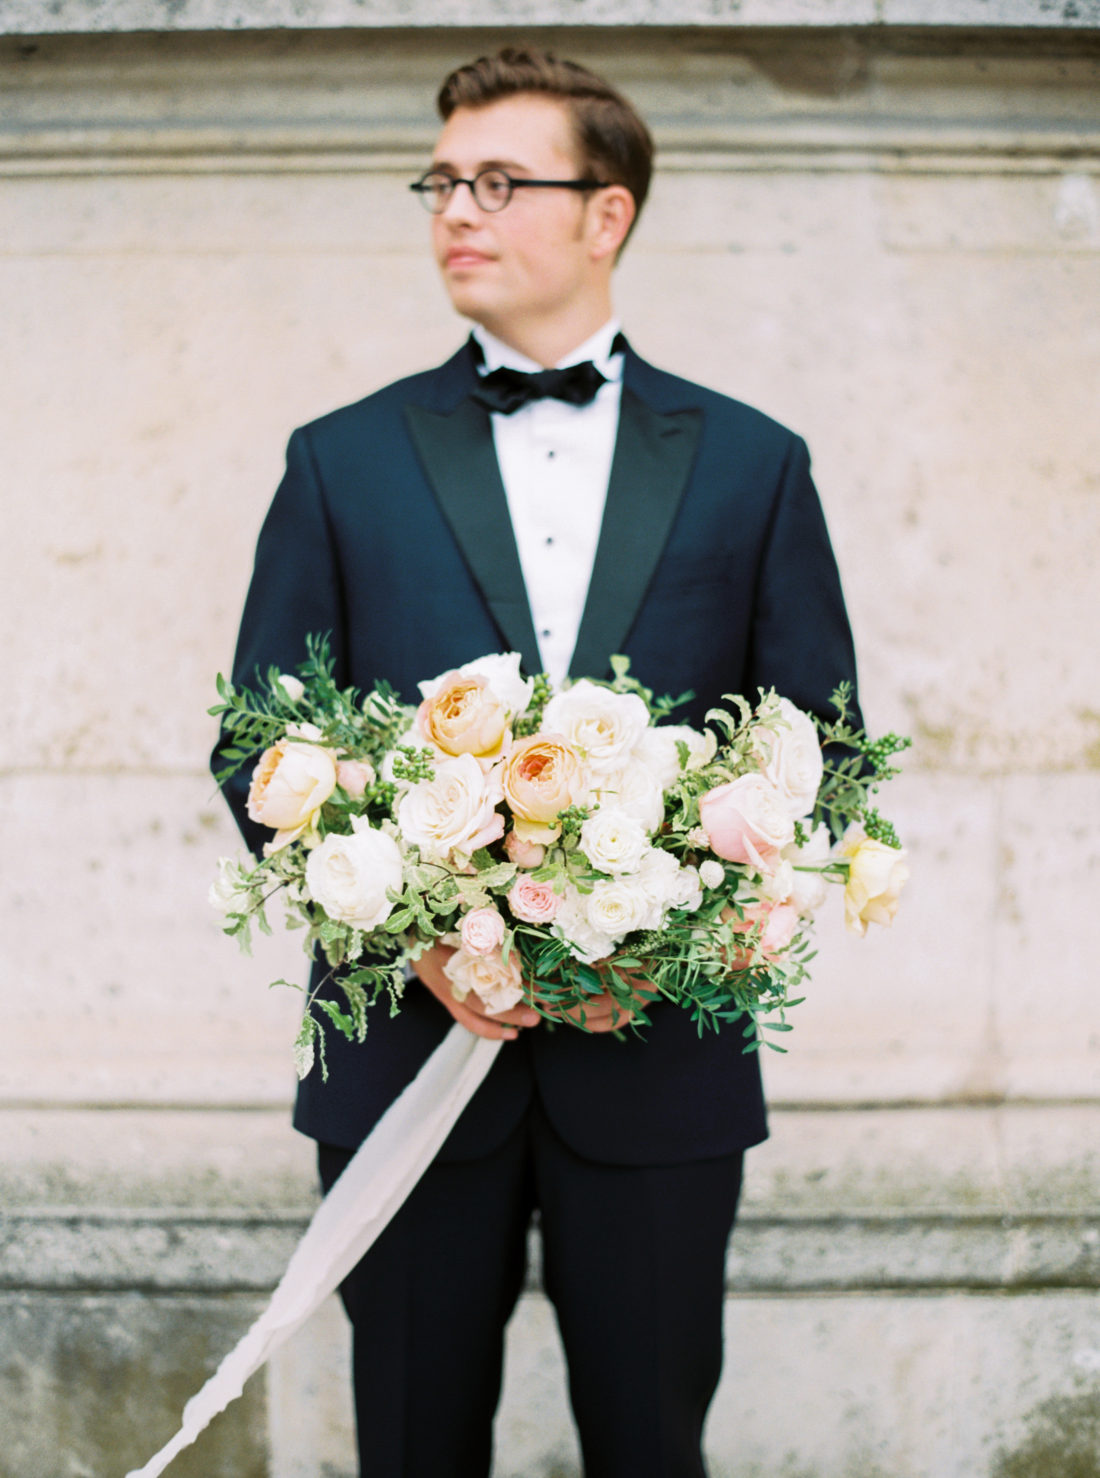 paris wedding planner rachael ellen events tips post photo 11